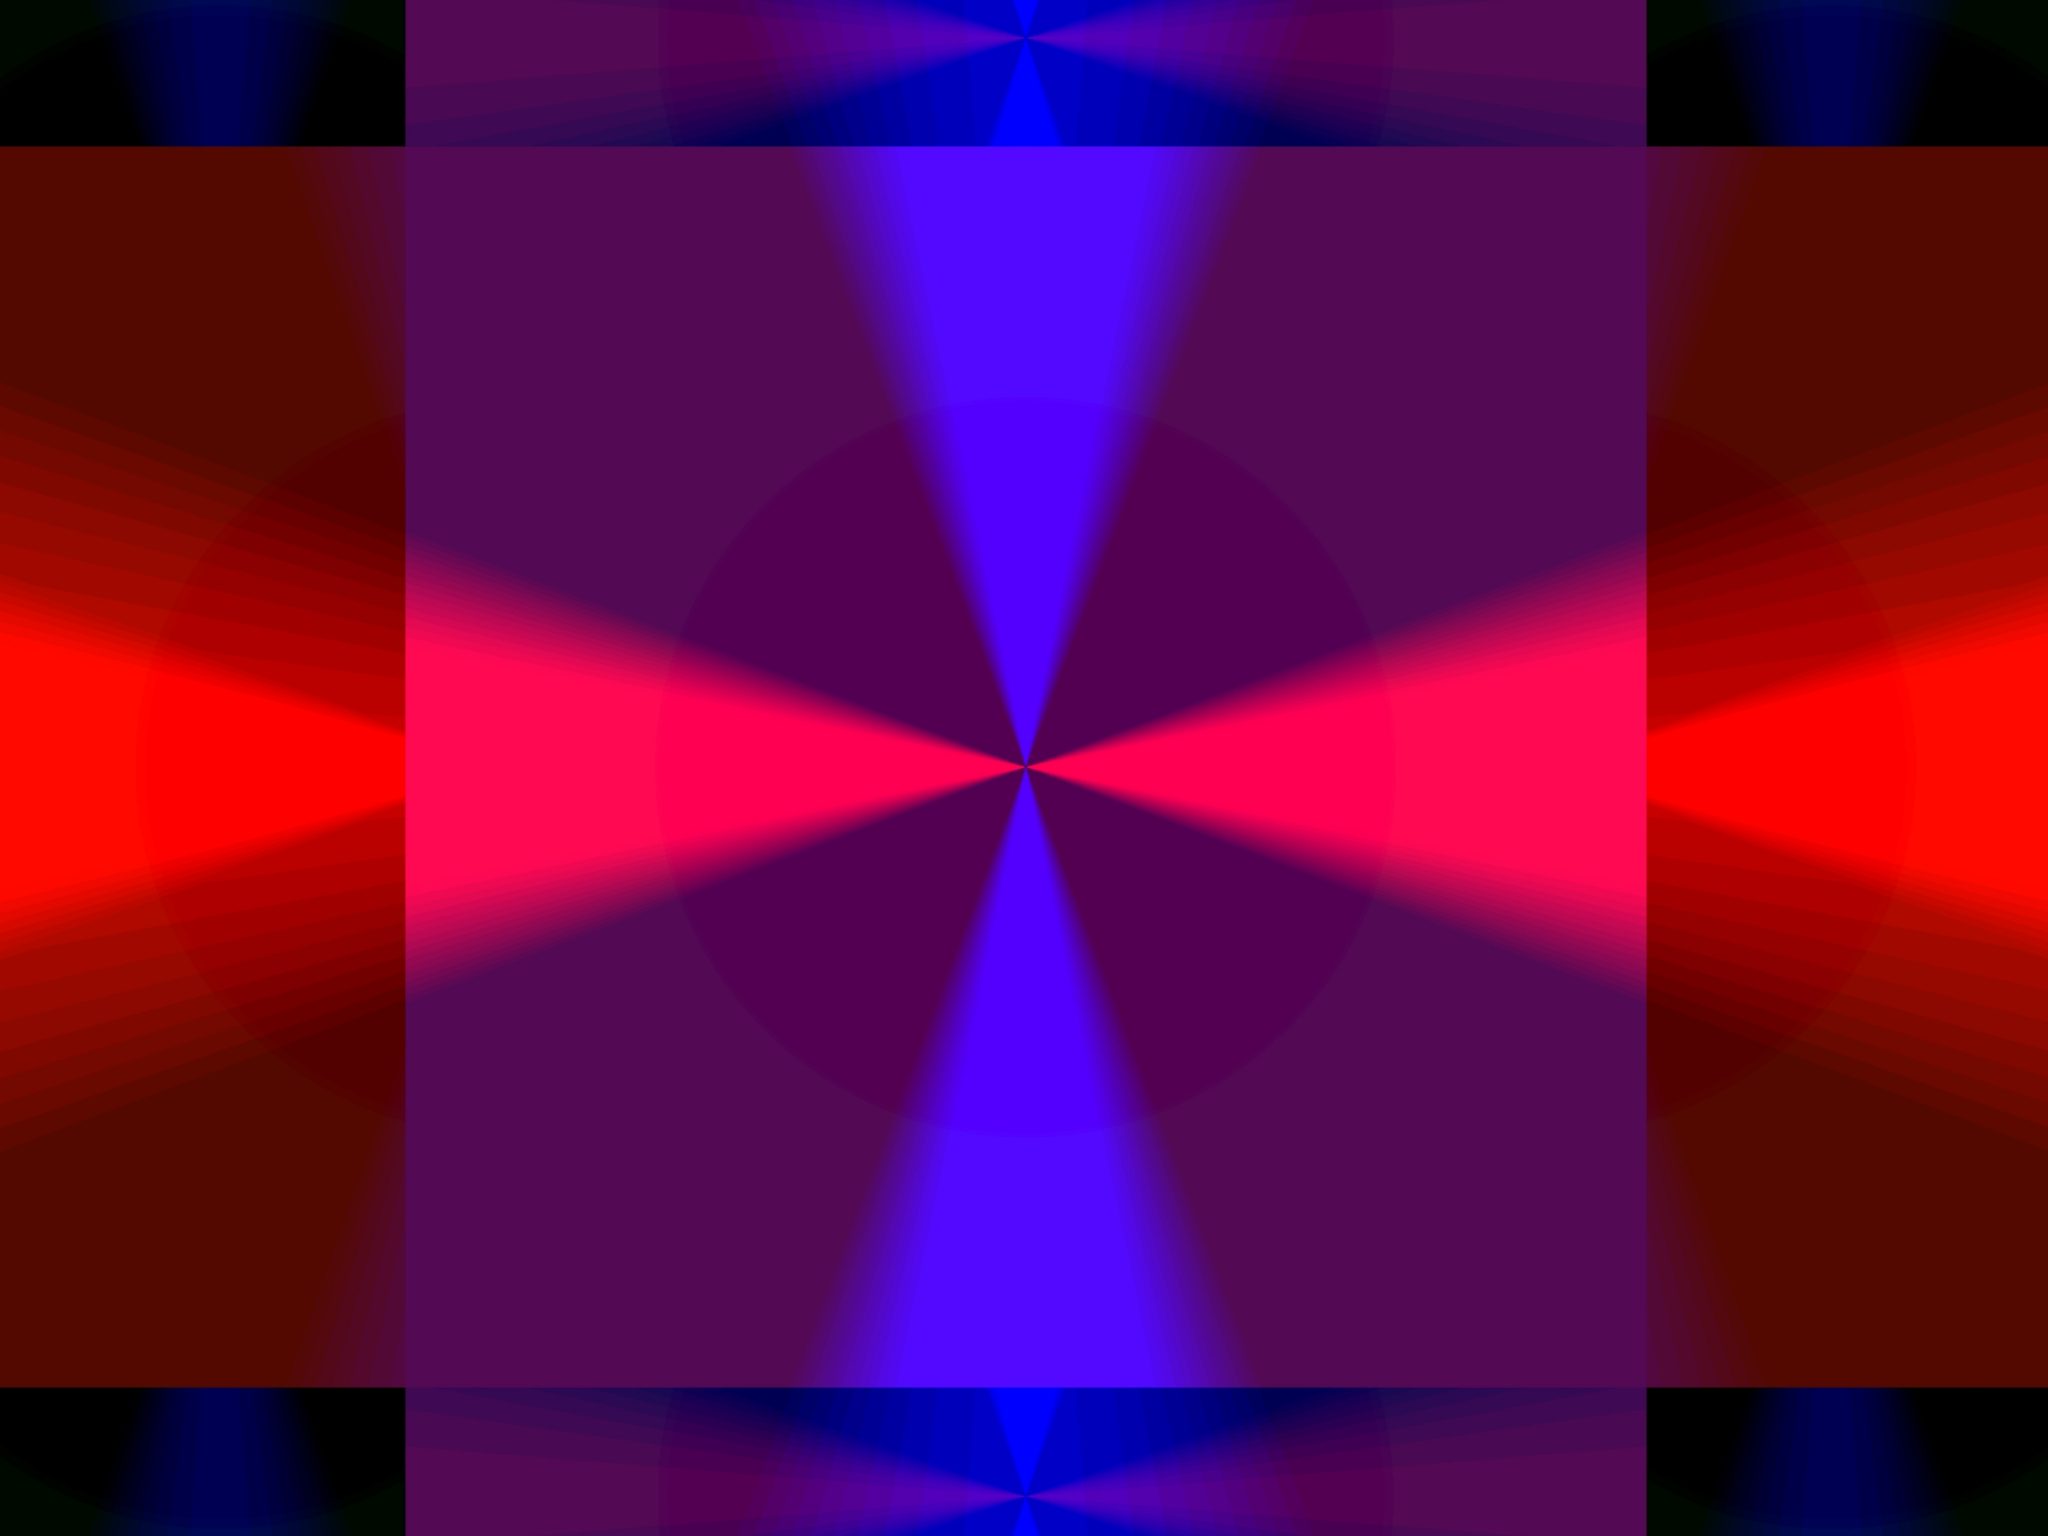 2048x1536 wallpaper Geometric Abstract Multicolor iPad Wallpaper 2048x1536 pixels resolution